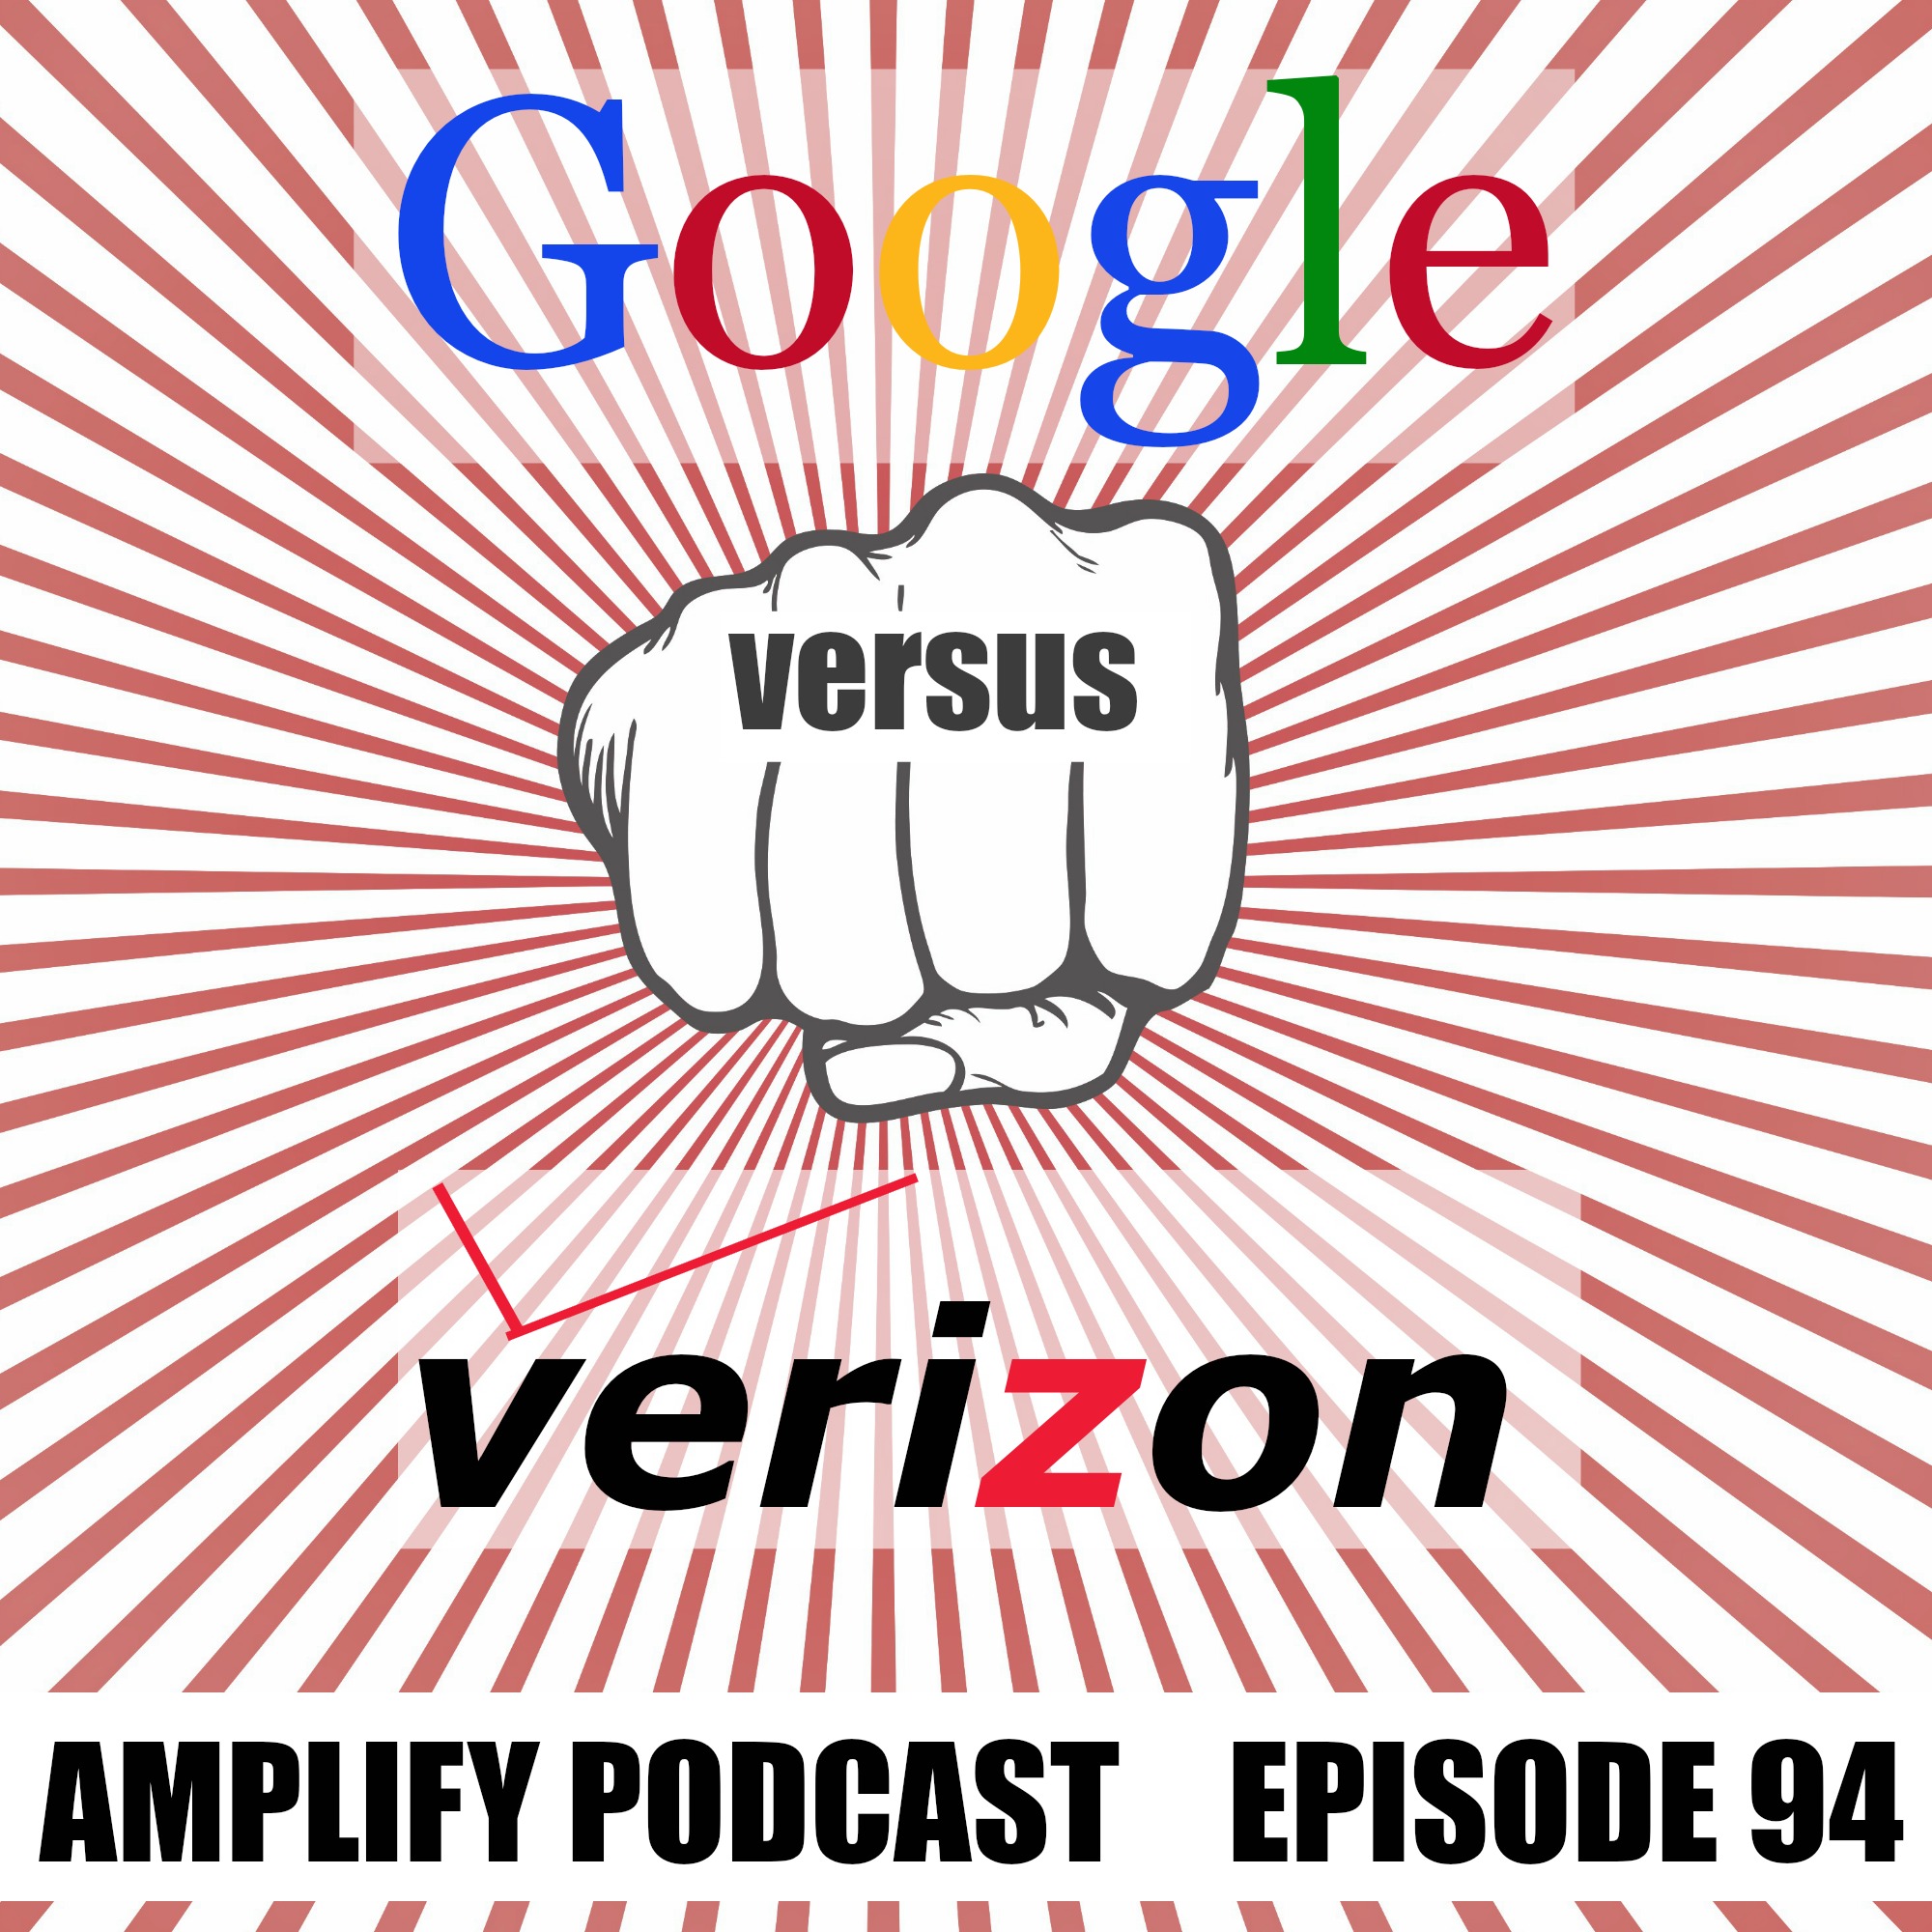 Can Verizon Topple Google?